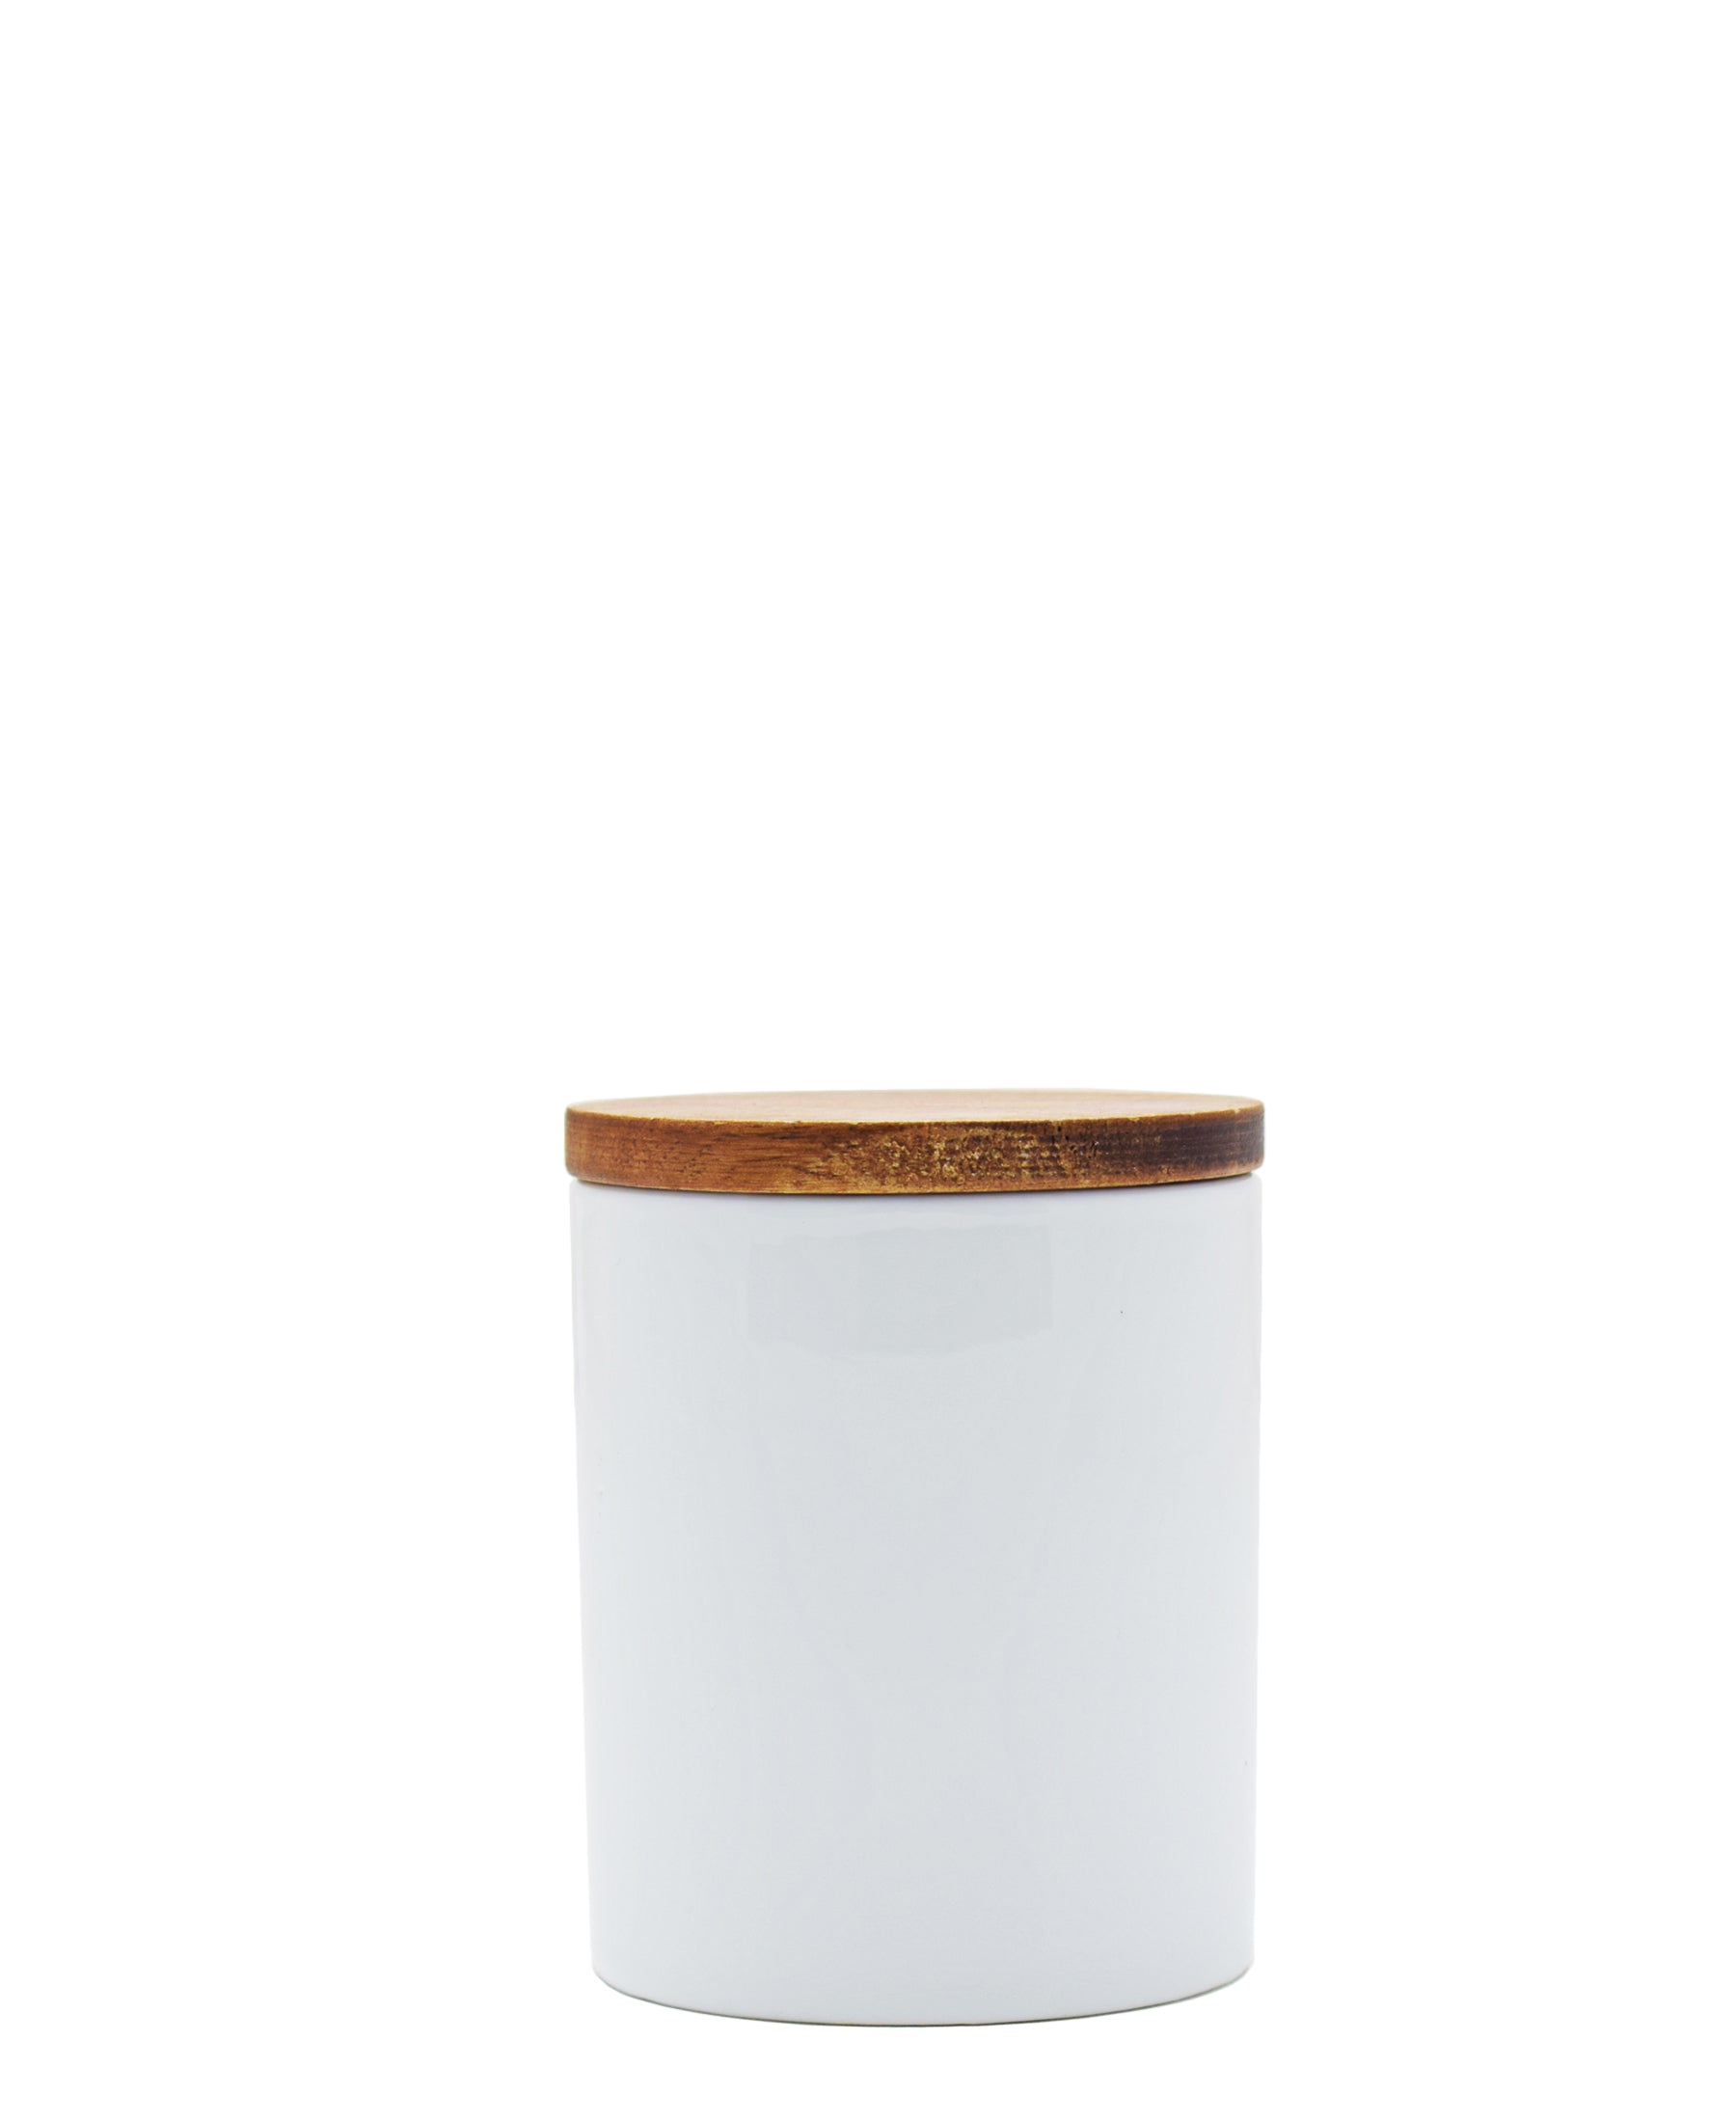 Eetrite 4 Piece Jar Set - White